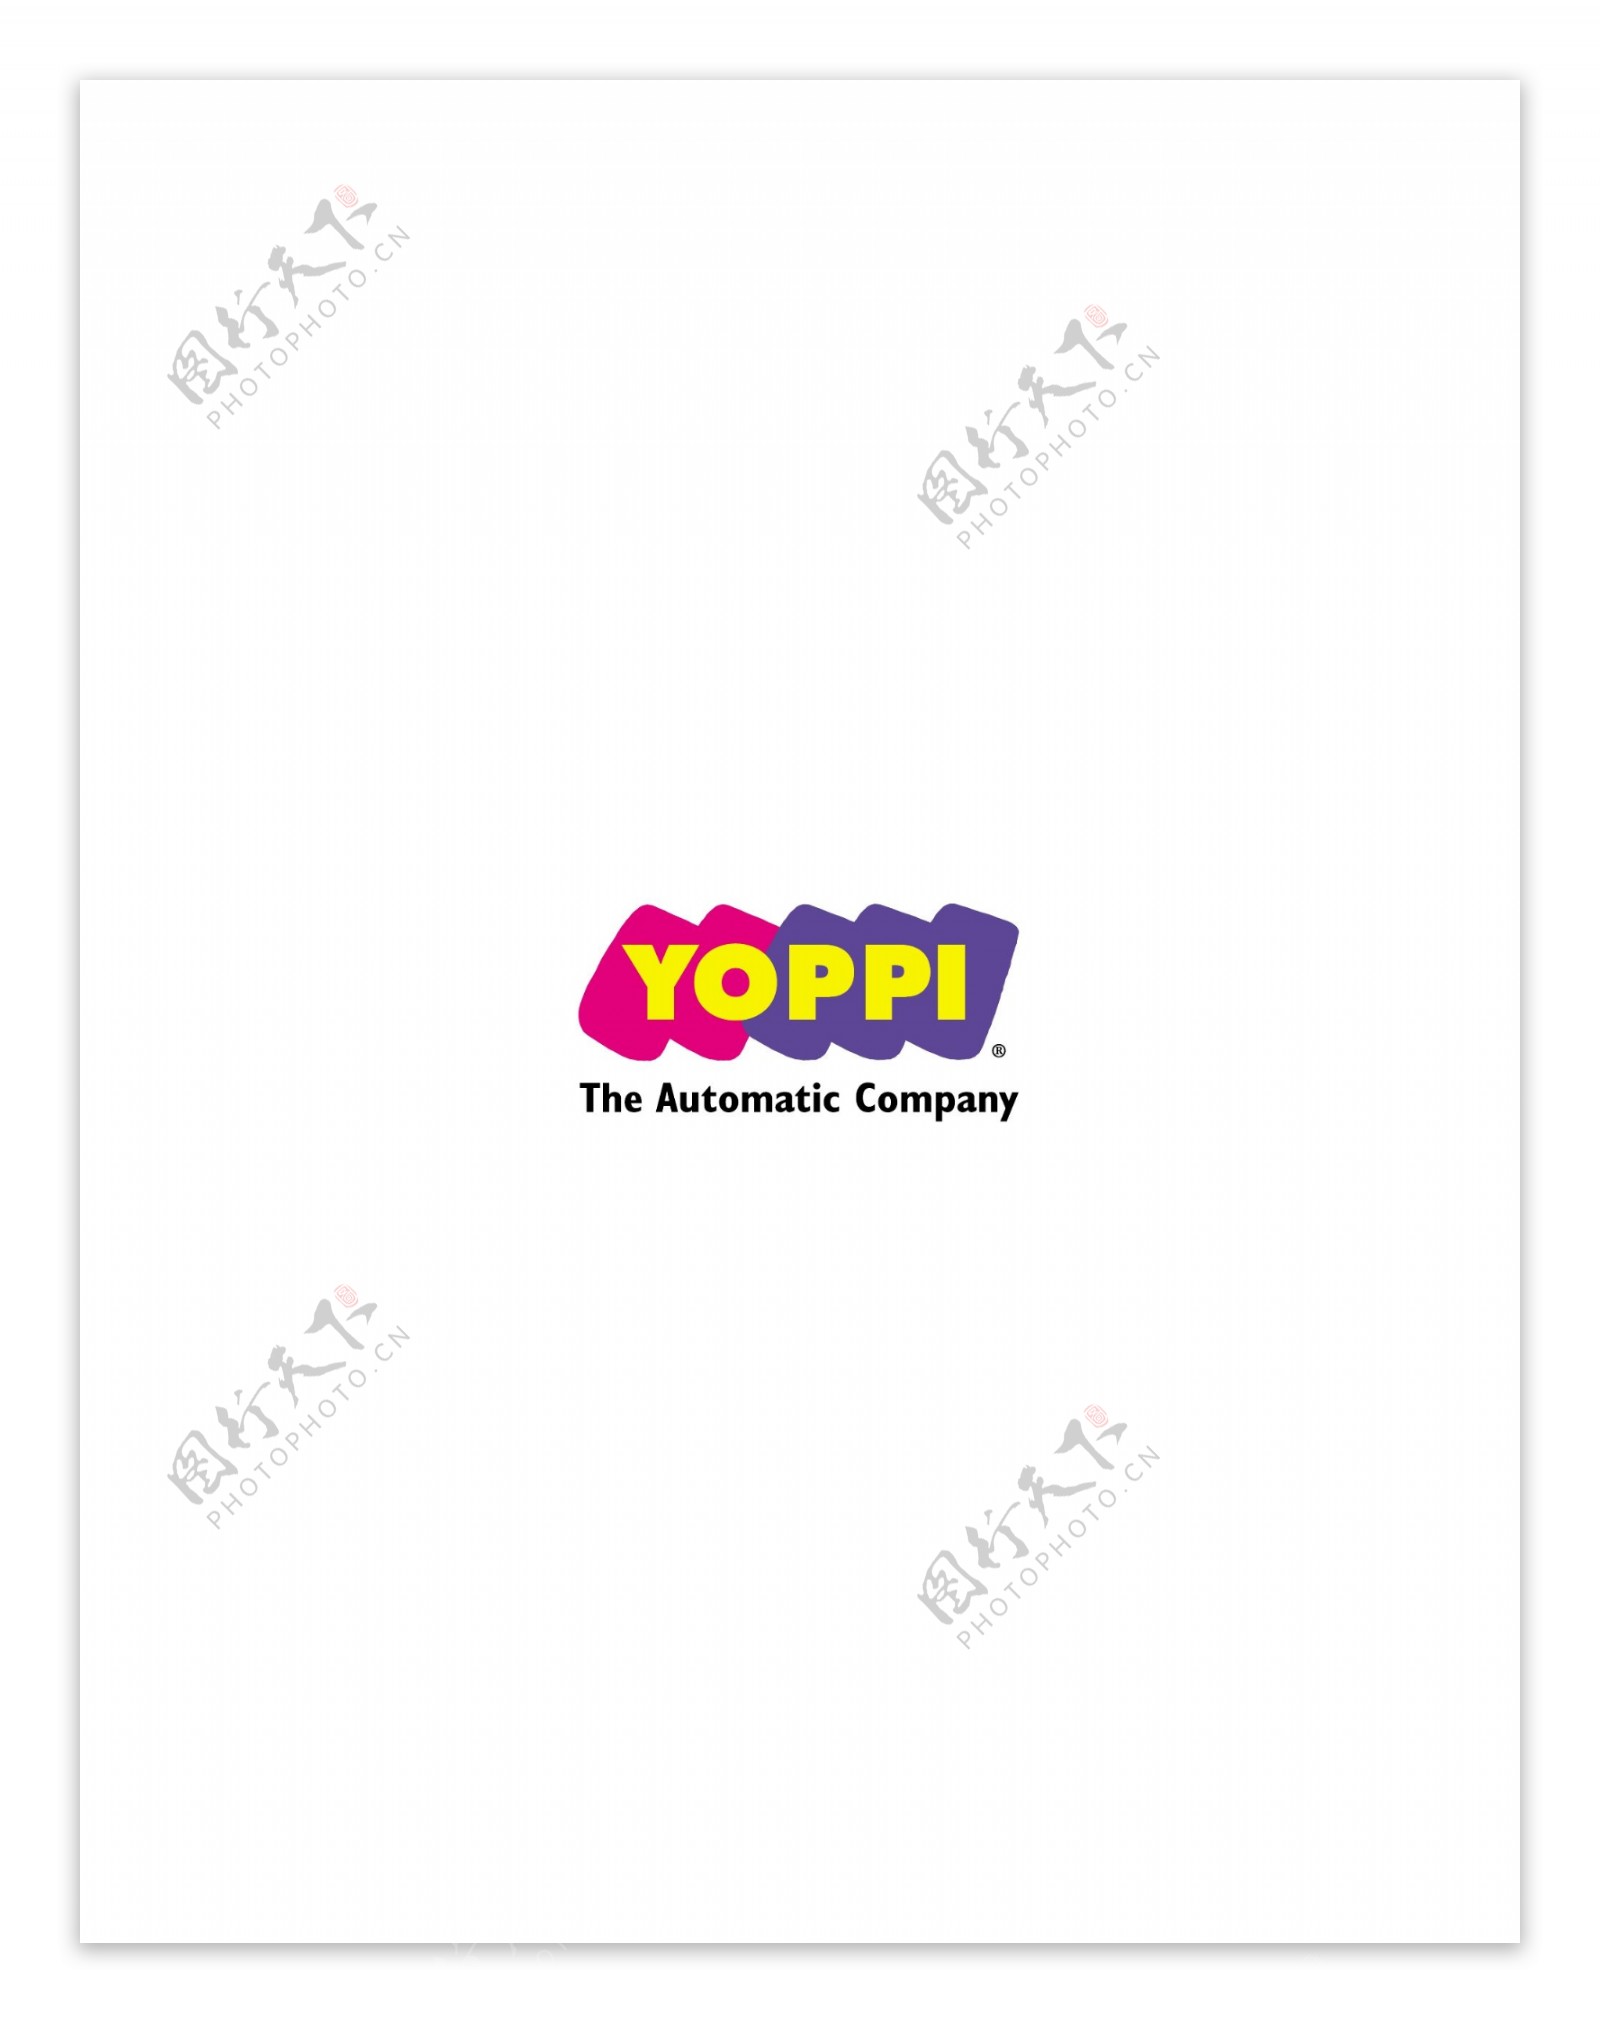 Yoppilogo设计欣赏足球和娱乐相关标志Yoppi下载标志设计欣赏